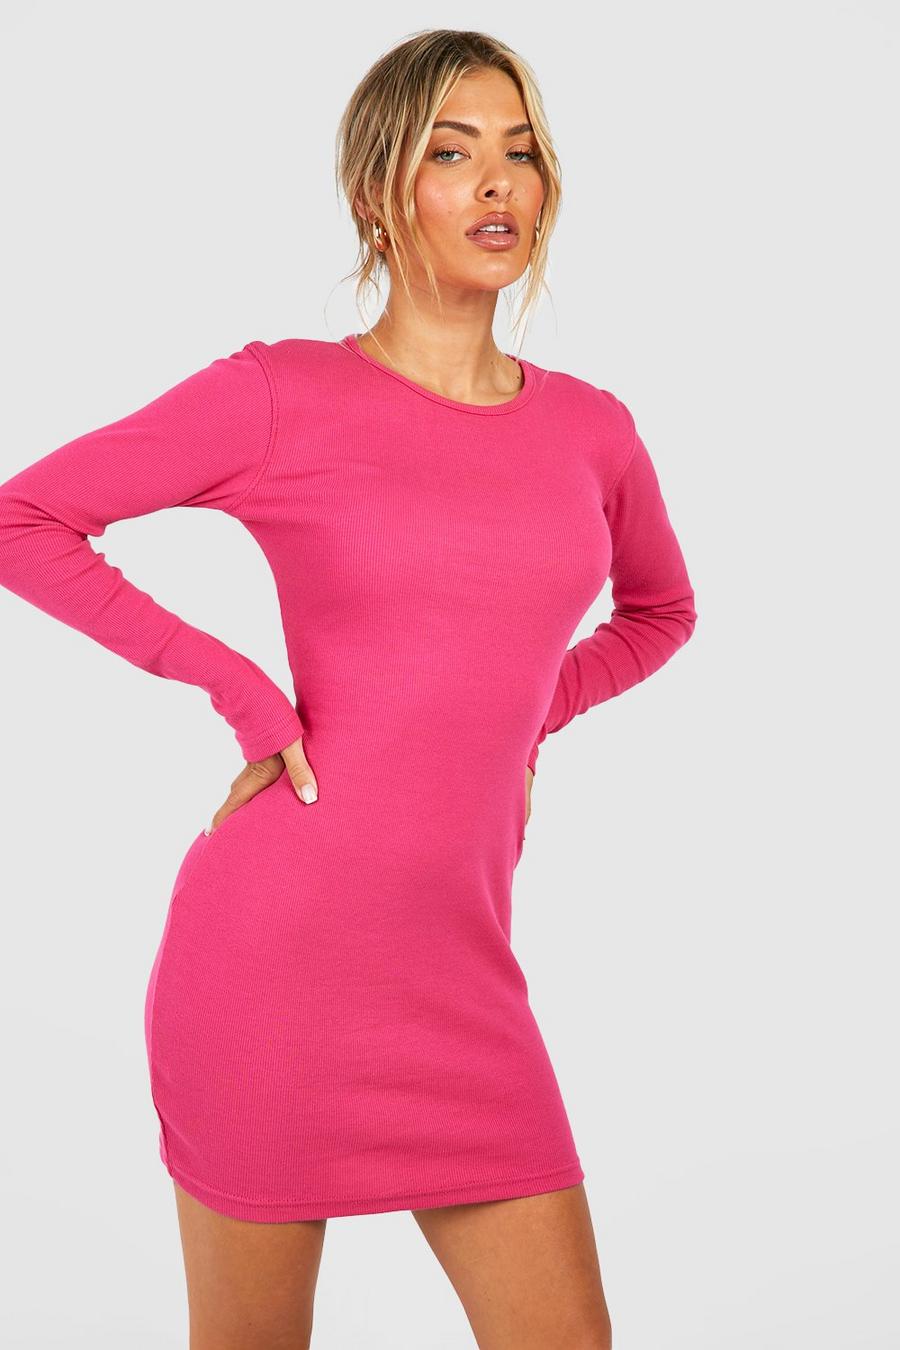 Langärmliges Basic Rundhals-Minikleid, Hot pink